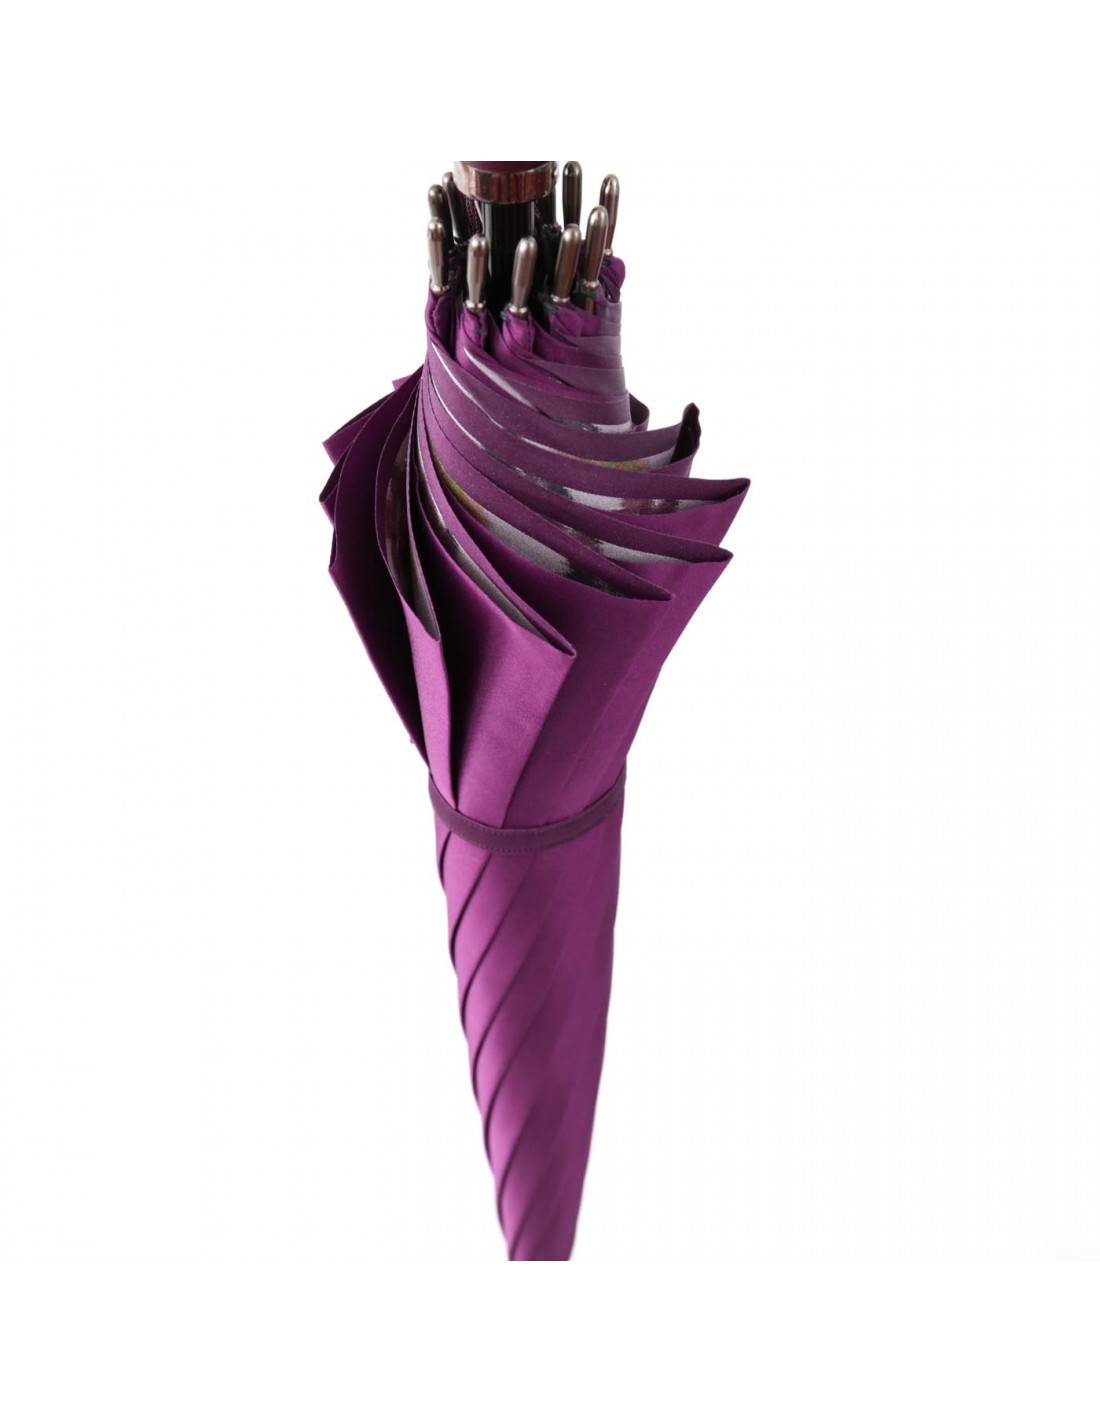 Damen Regenschirm Blumenmuster Violett